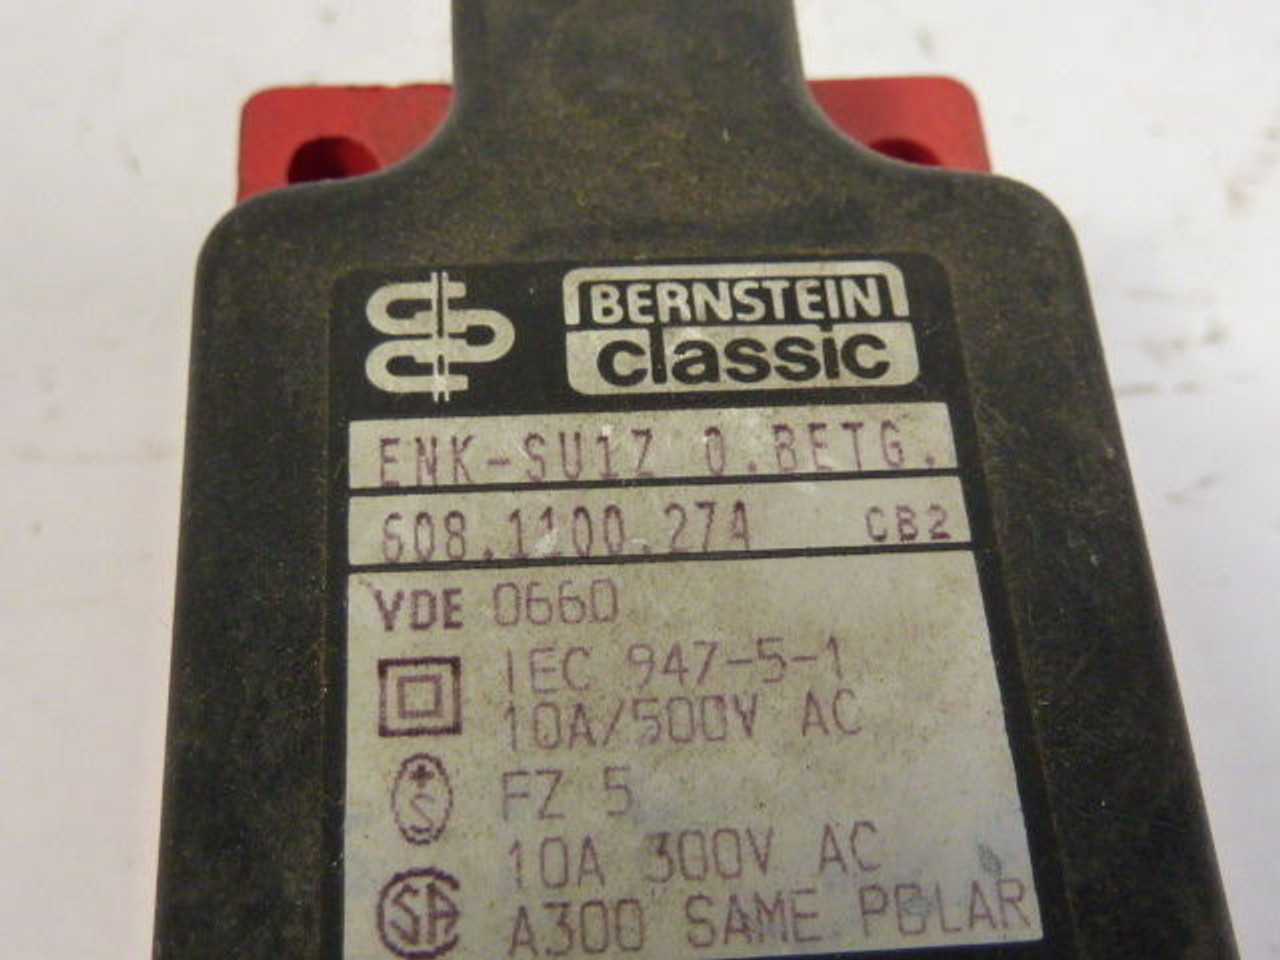 Bernstein ENK-SU1Z O.BETG Limit Switch 10A USED